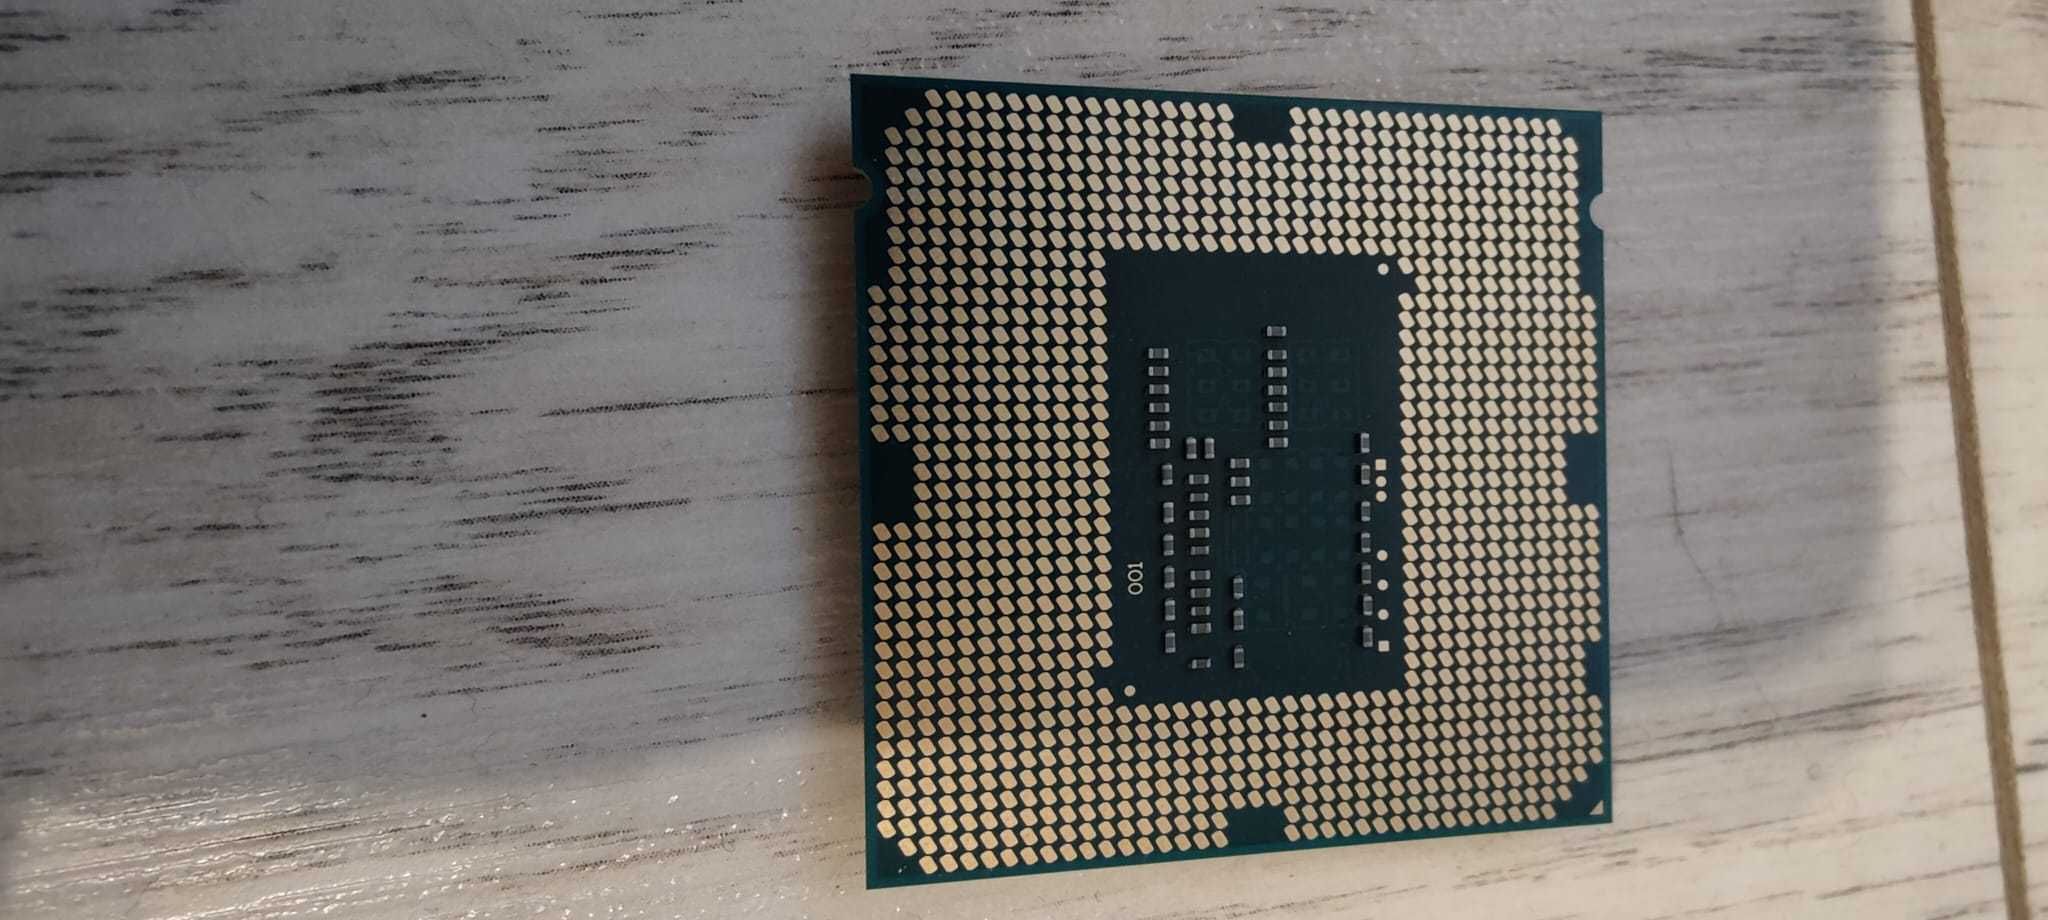 Procesor Intel Core i3-4160 3M Cache, 3.60 GHz LGA1150, box